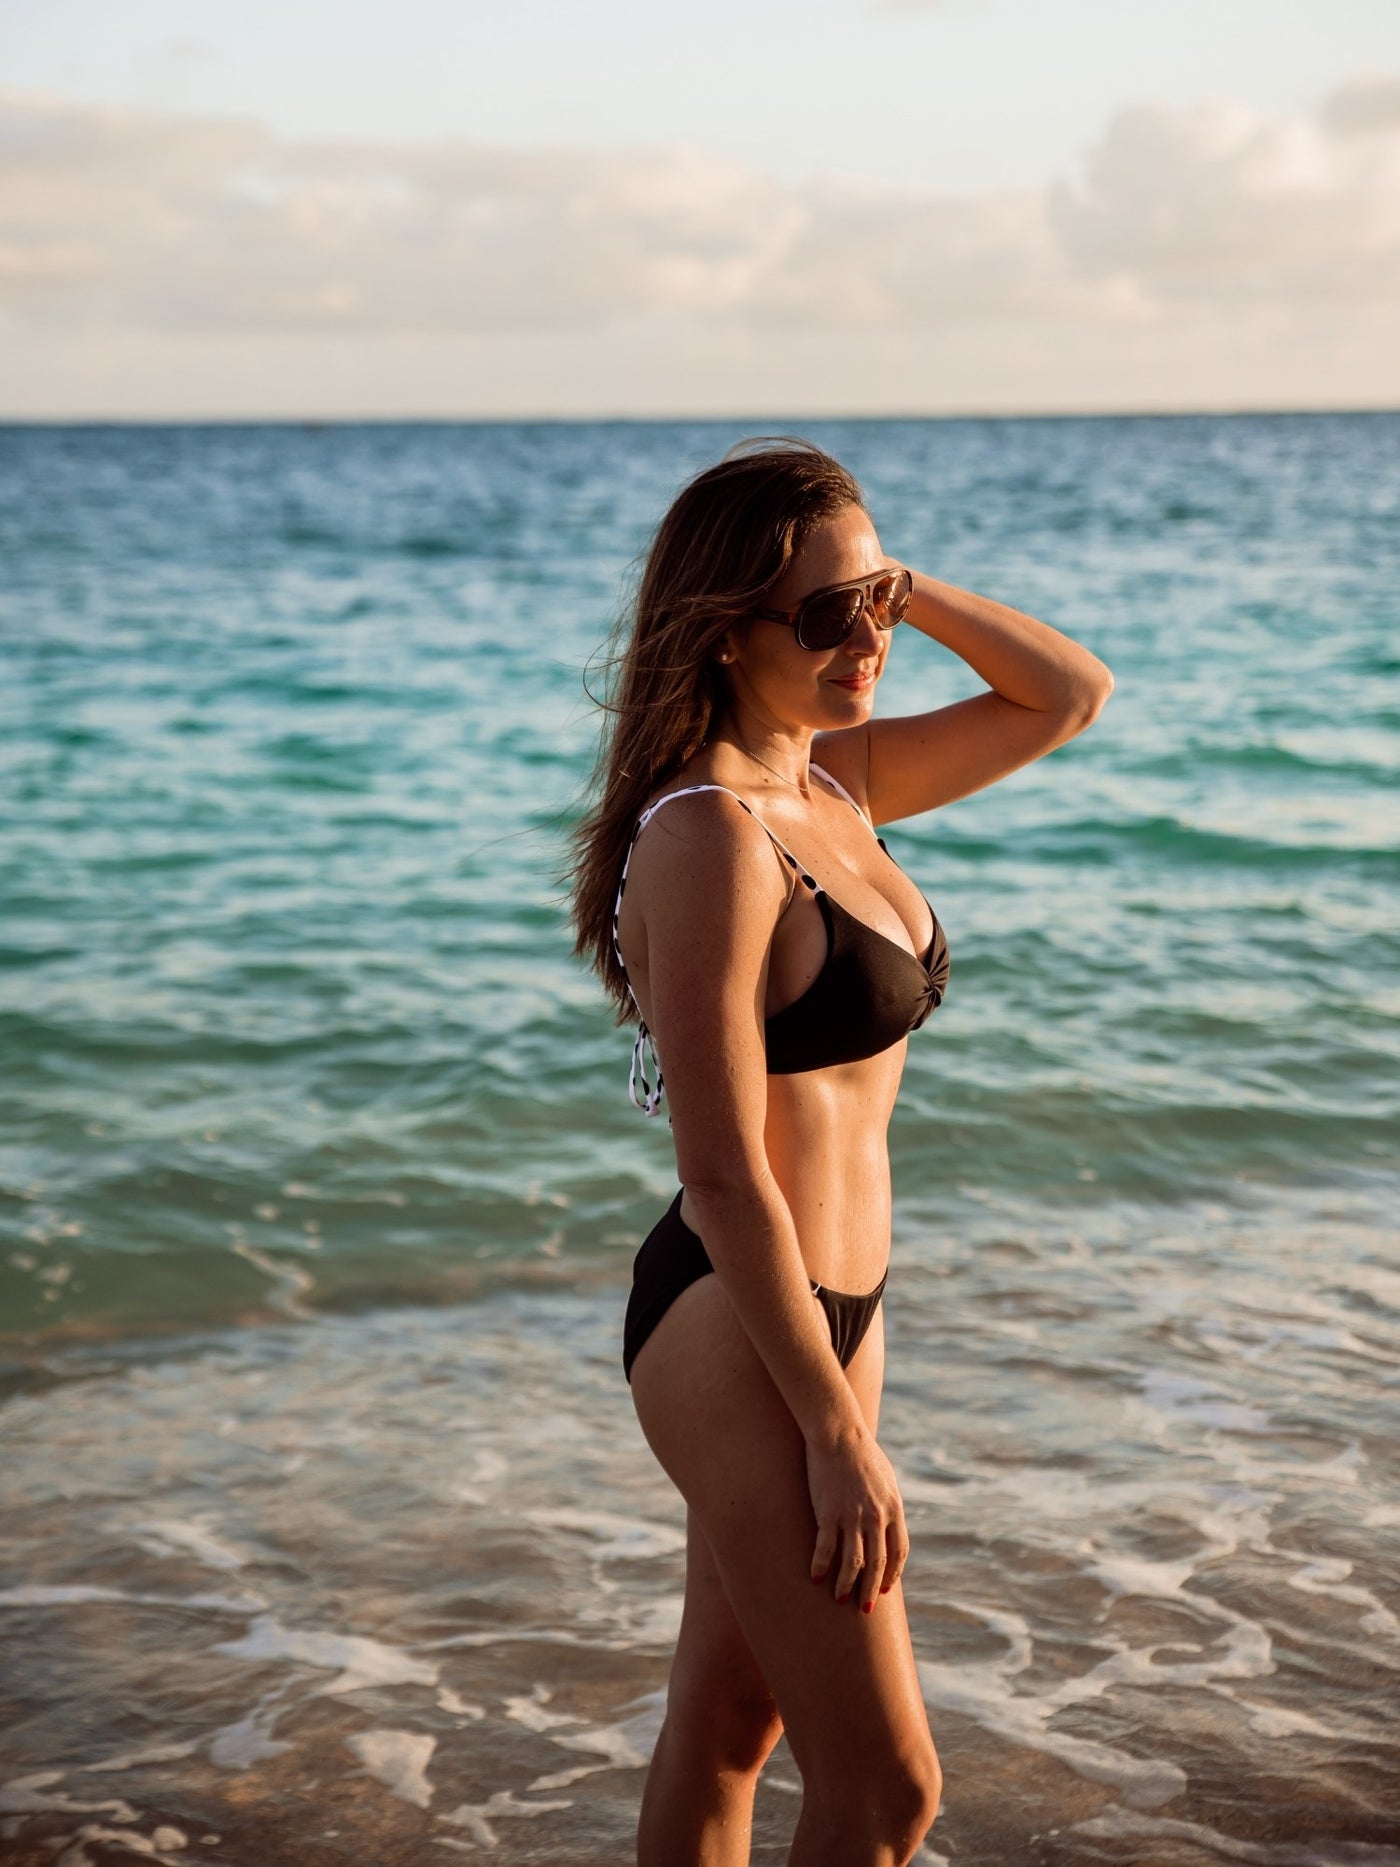 Navalora Matching Swimsuits Women's Dalmatians on Vacation Black and White Twist String Bikini Top